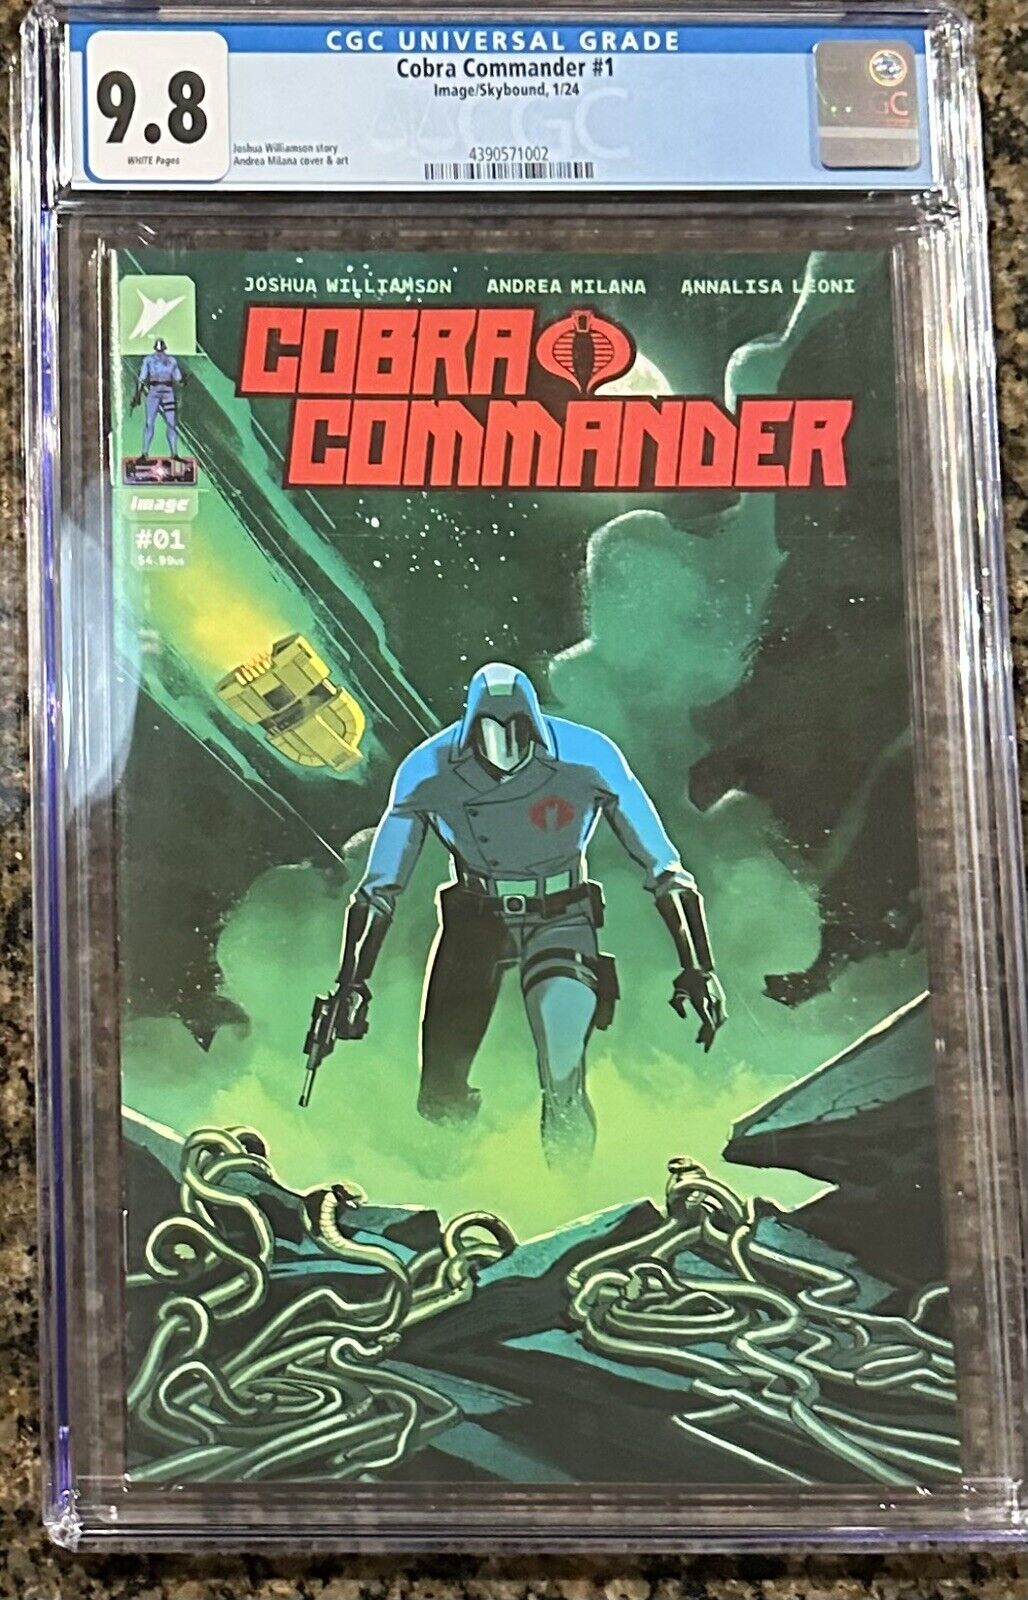 Cobra Commander #1 - Image - Energon Universe - CGC 9.8 - Beautiful Cover